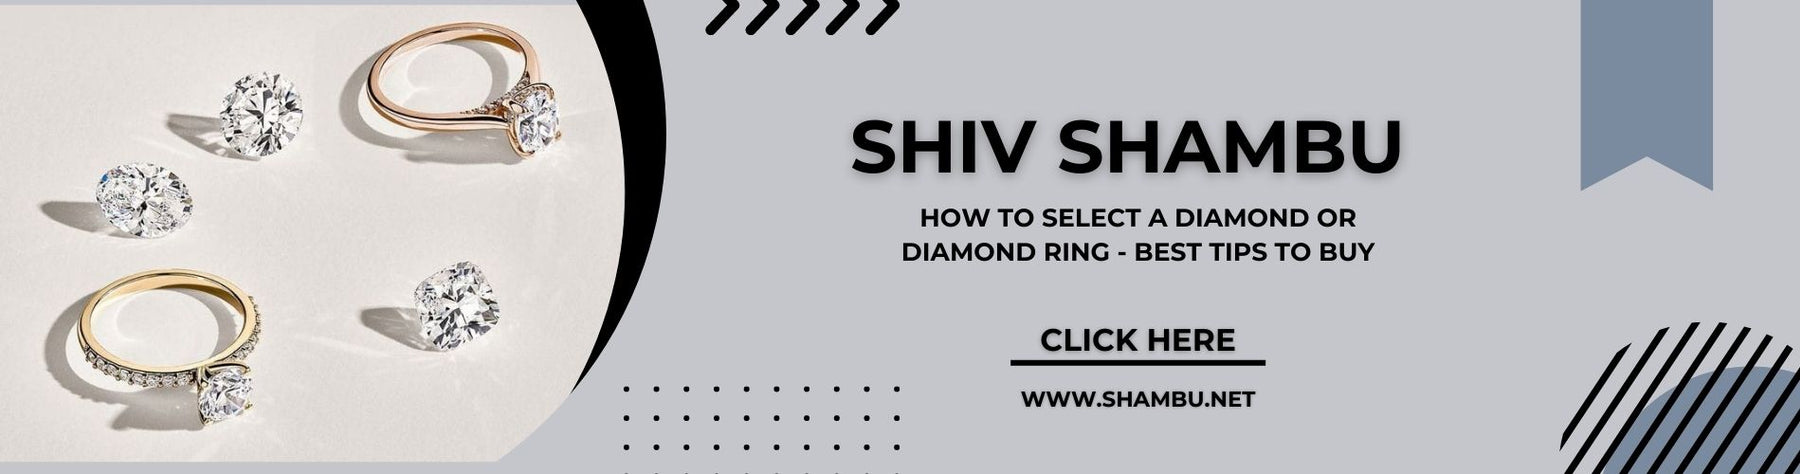 How to Select a Diamond or Diamond Ring - Best Tips to Buy Shiv Shambu